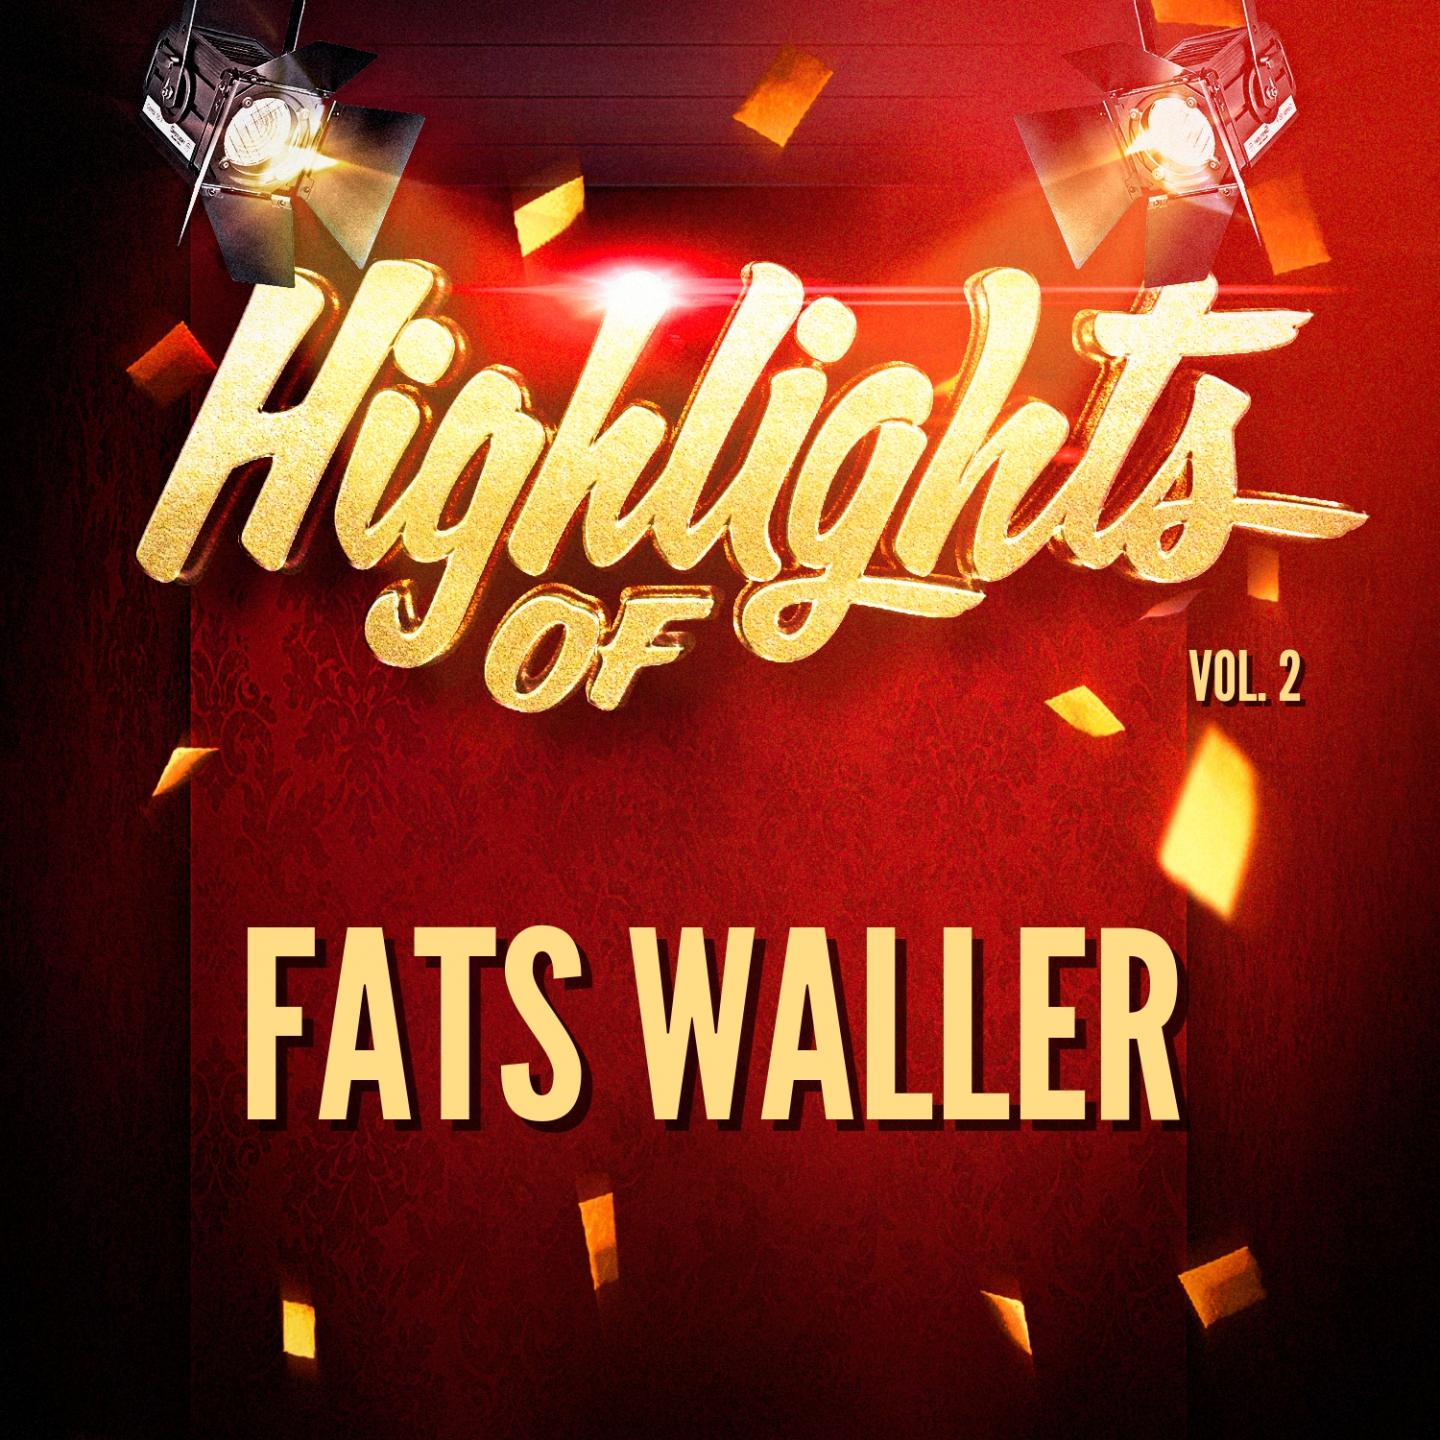 Highlights of Fats Waller, Vol. 2